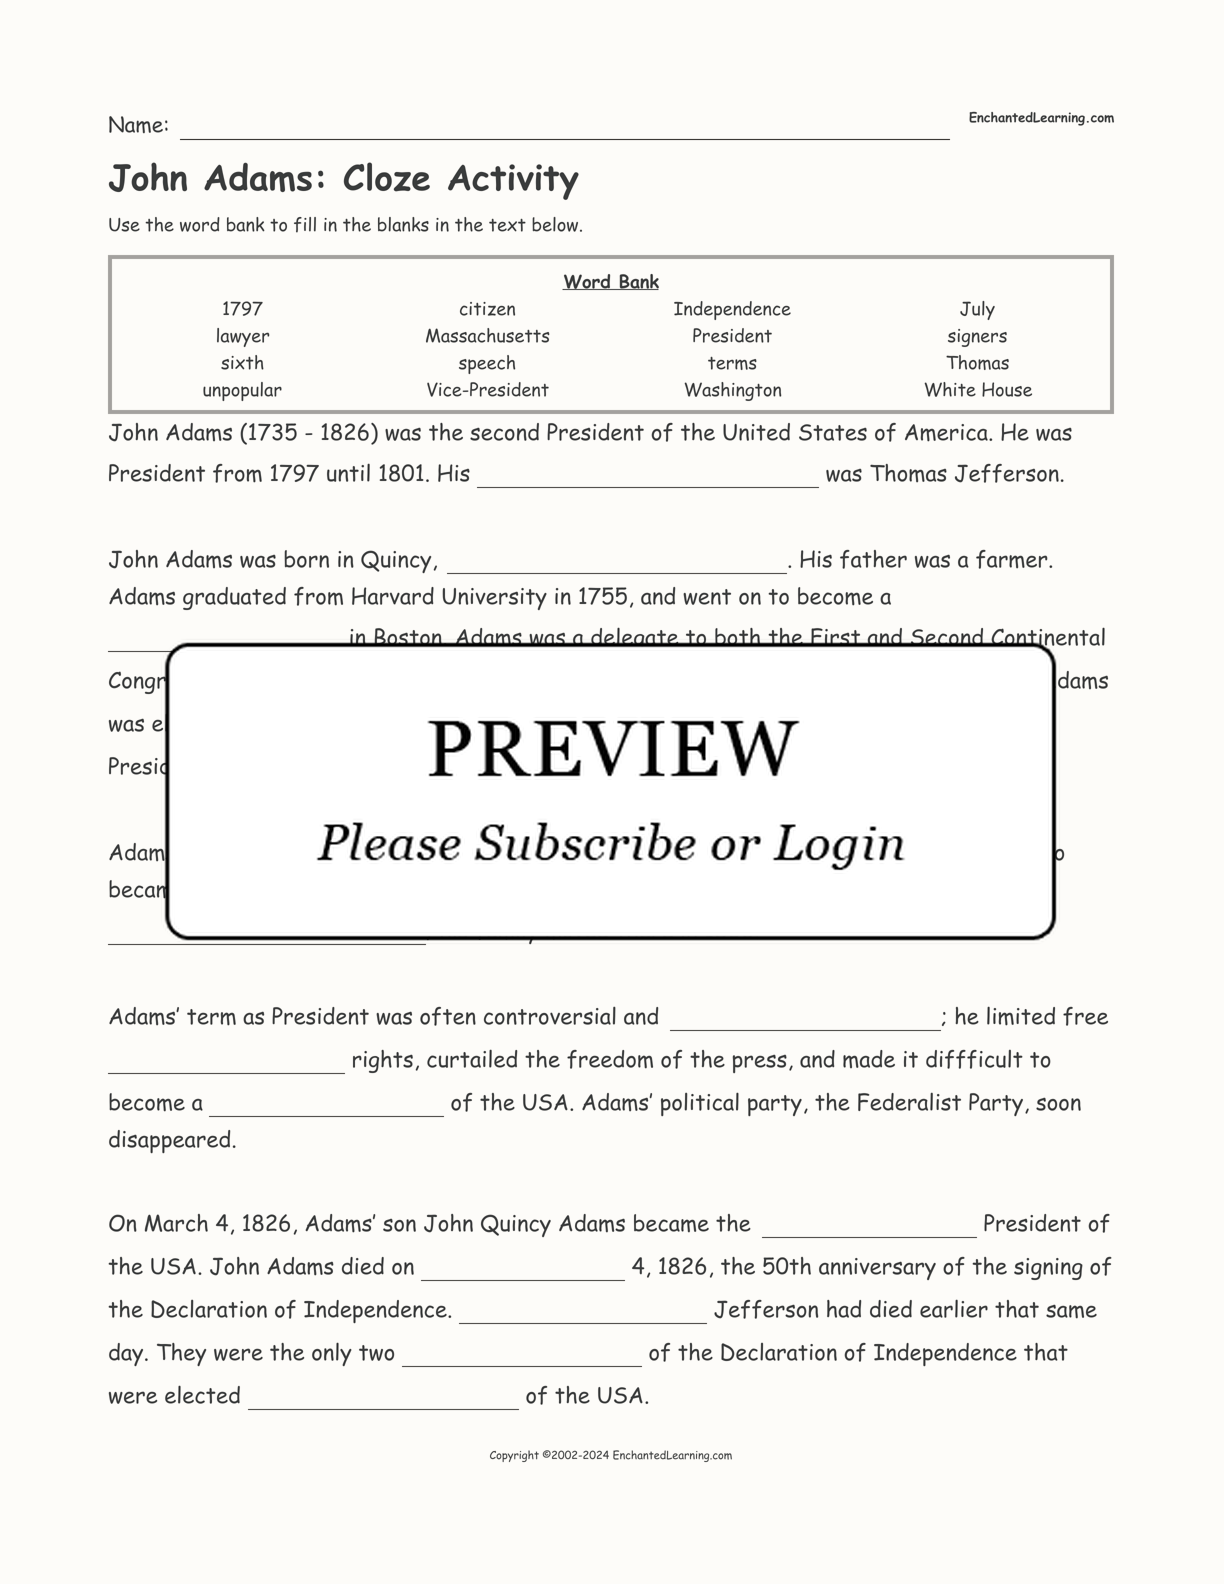 John Adams: Cloze Activity interactive worksheet page 1